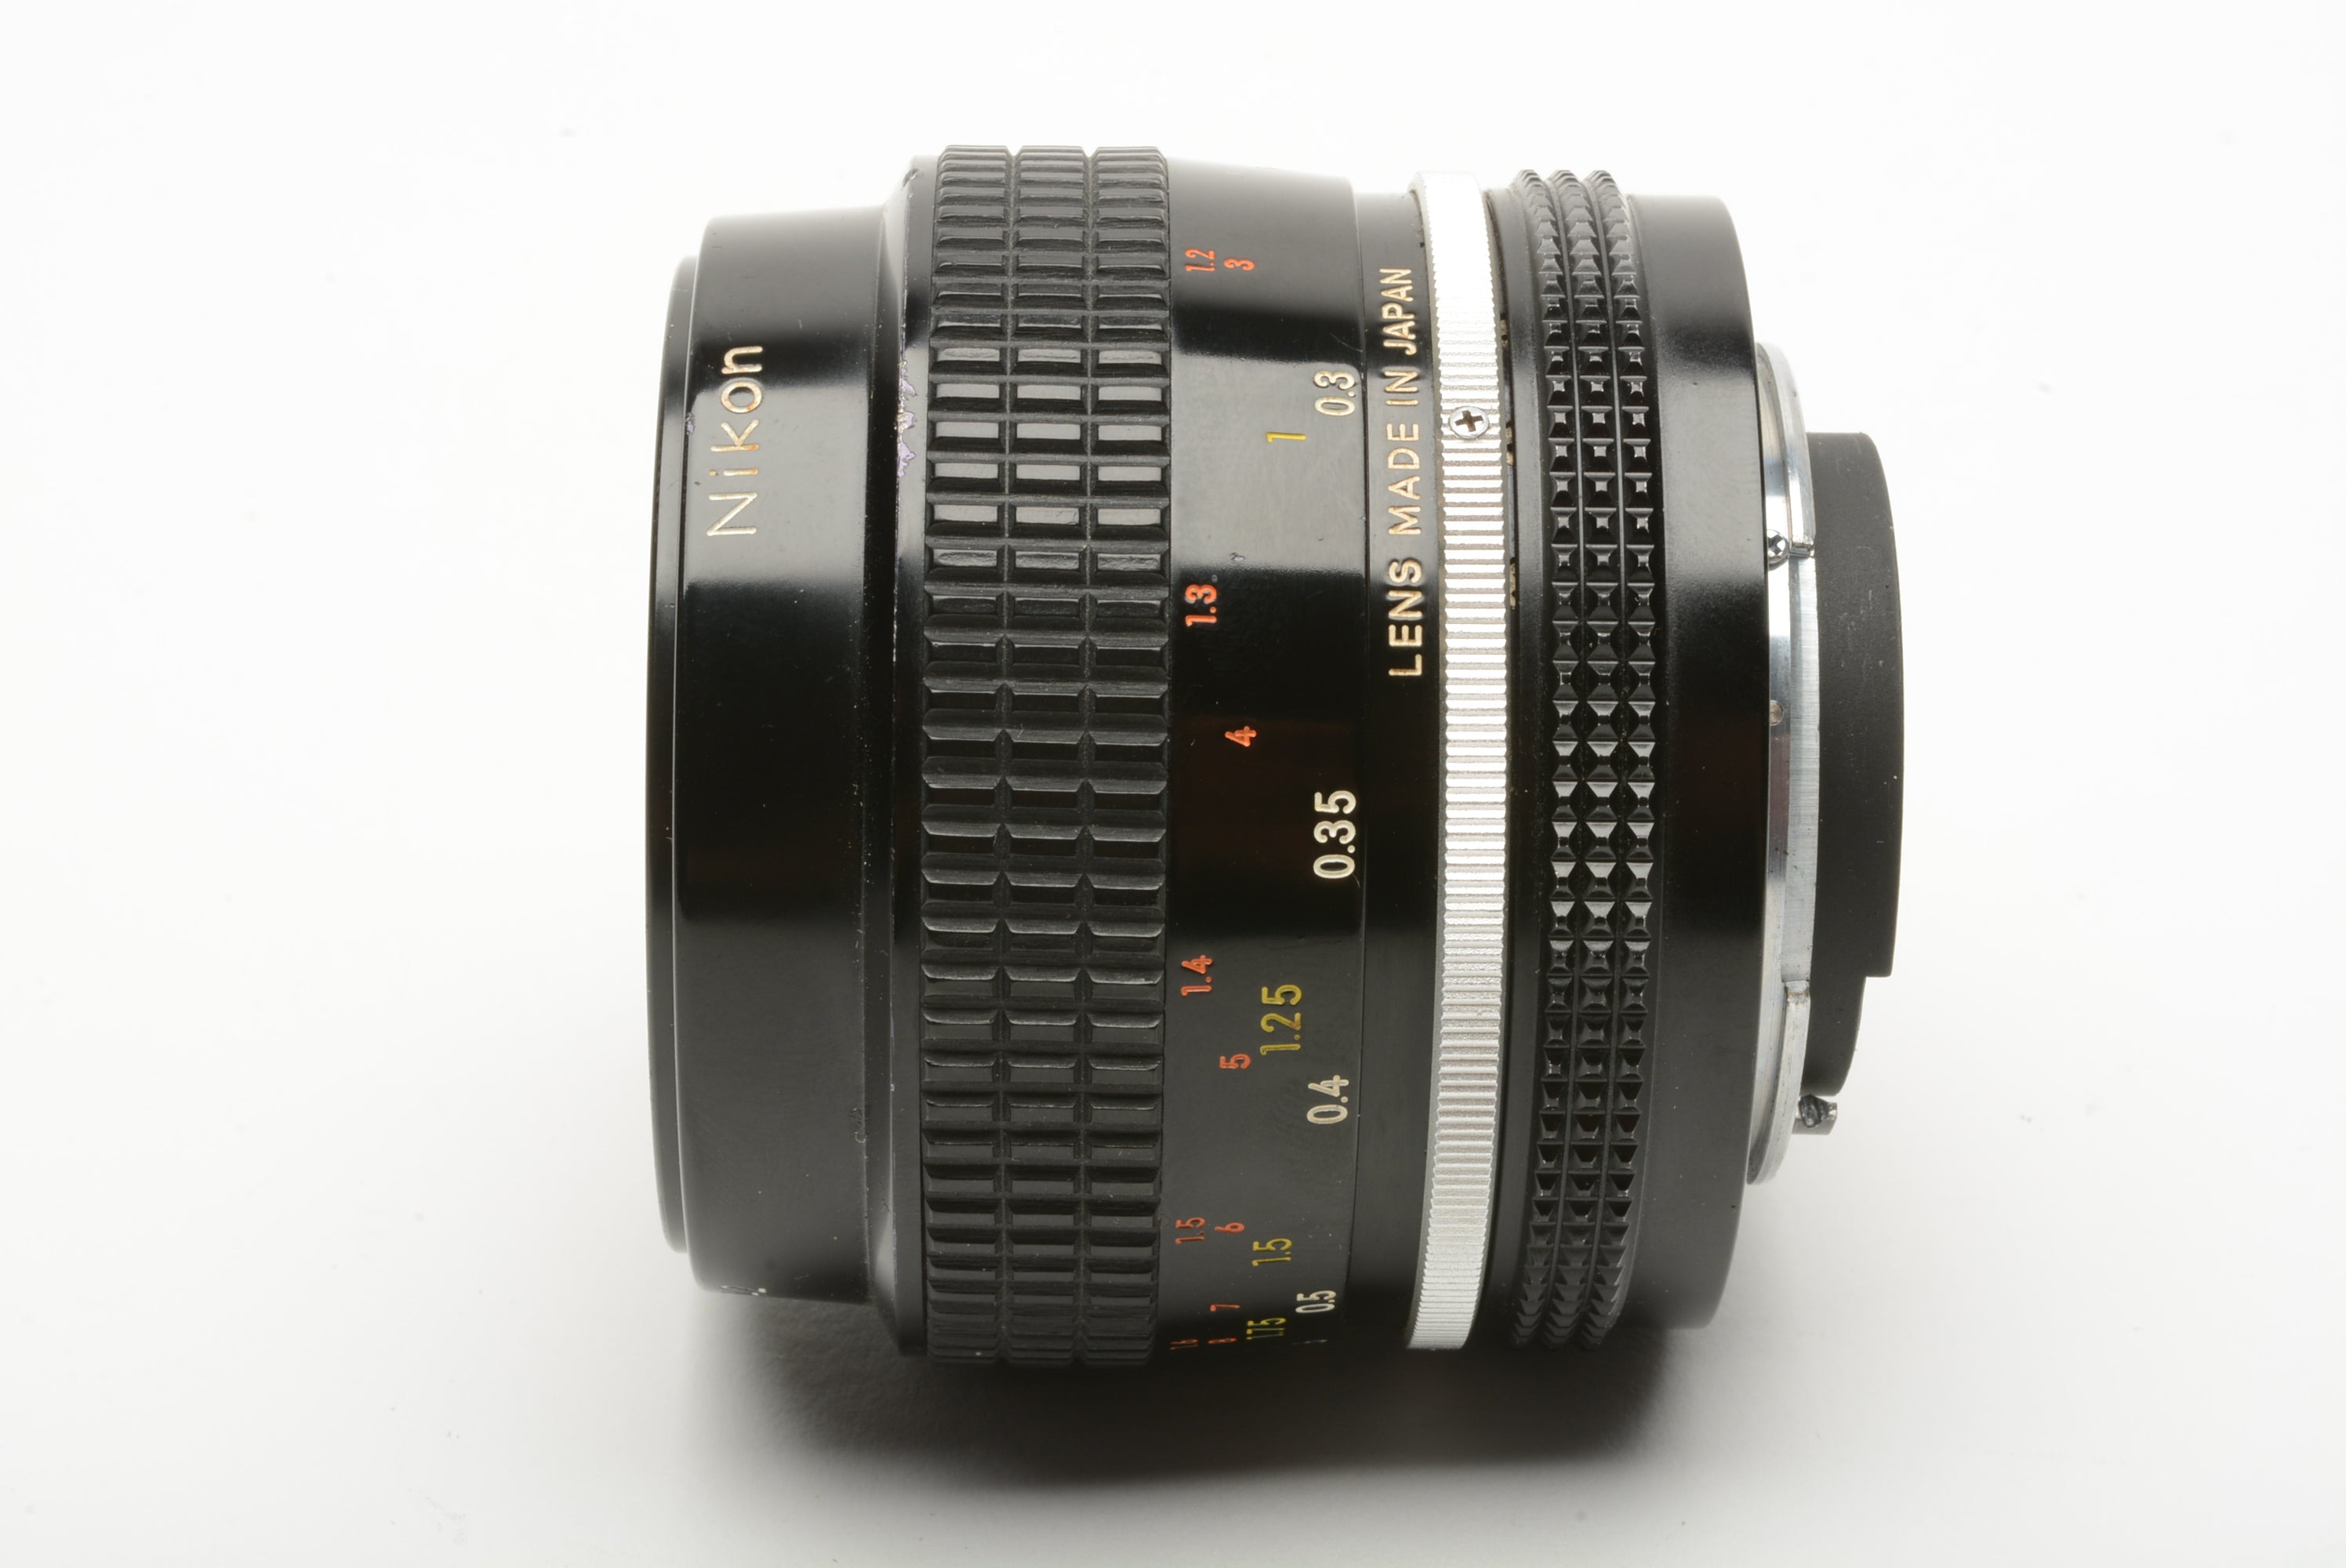 Nikon Nikkor 55mm f3.5 Non-AI micro lens, caps, clean & sharp!